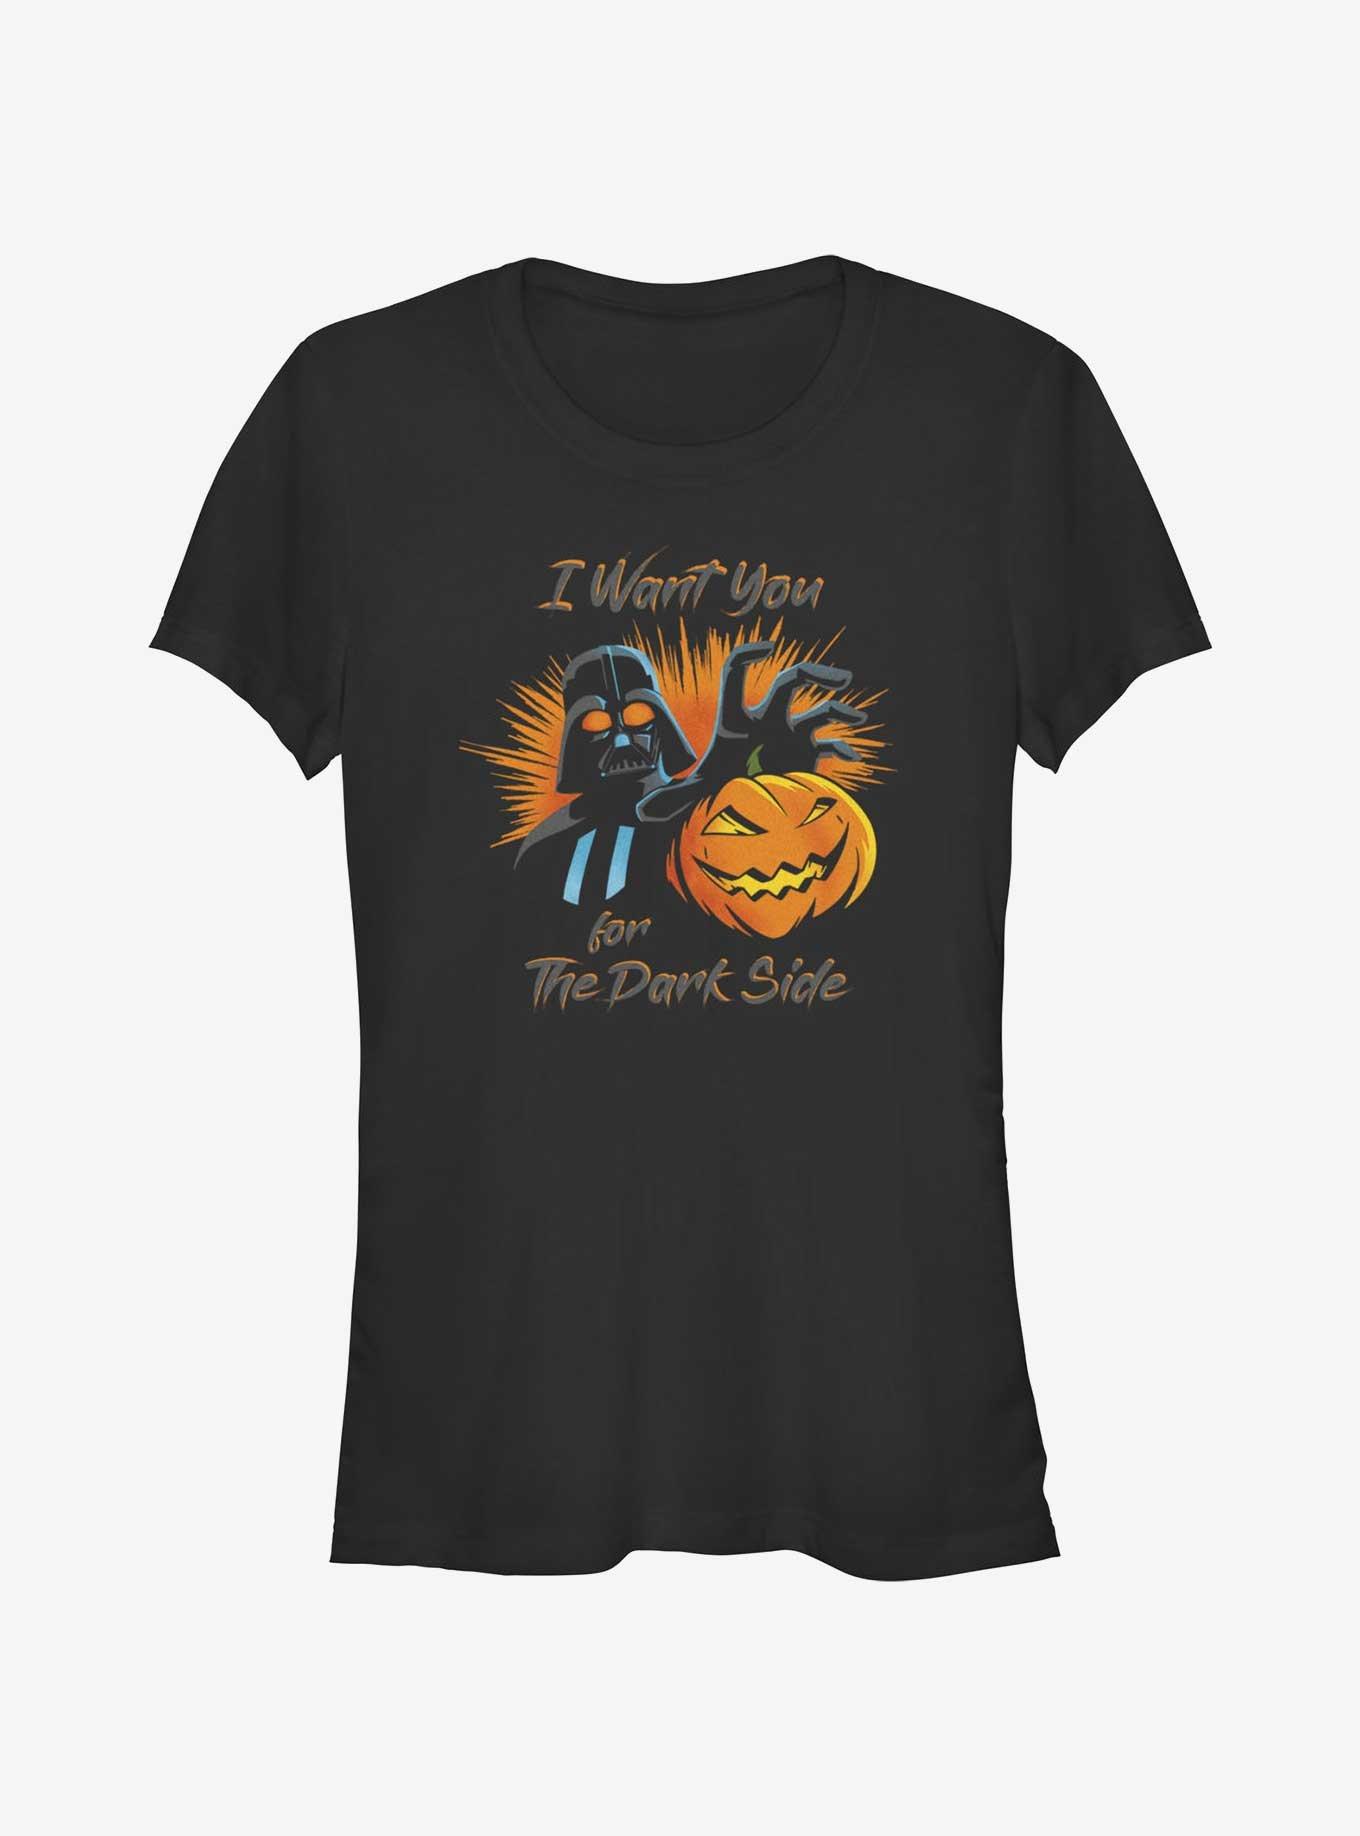 Star Wars Dark Side Wants You Girls T-Shirt